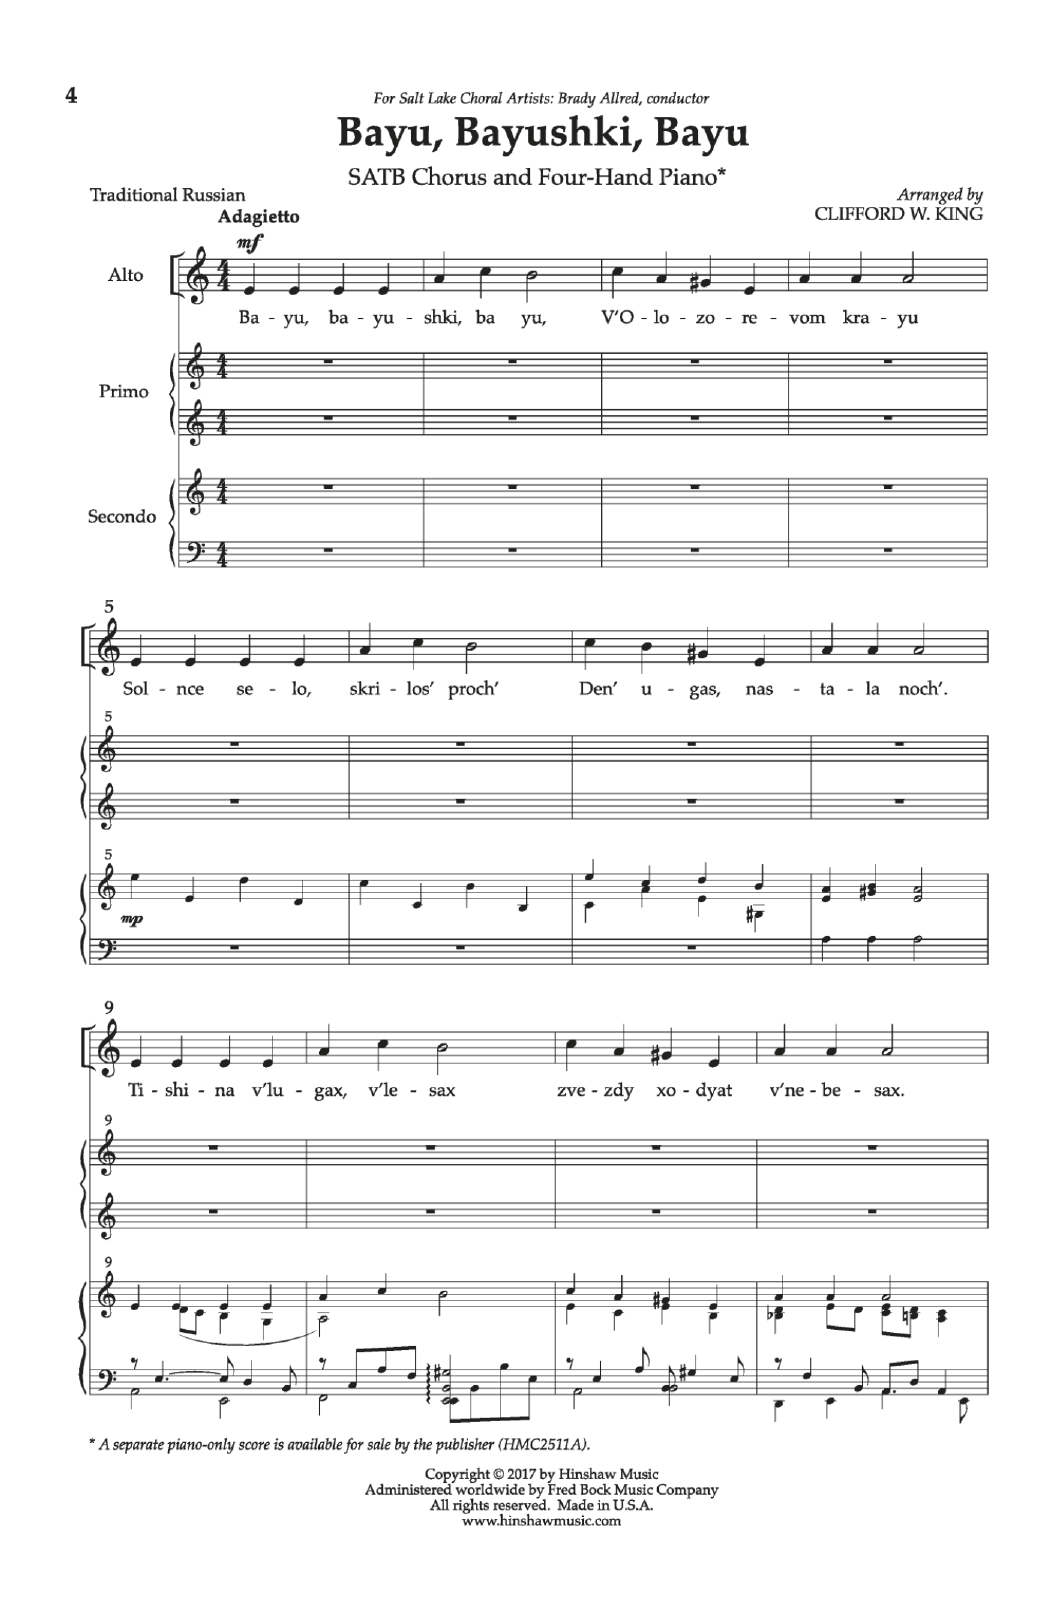 Download Clifford W. King Bayu, Bayushki, Bayu Sheet Music and learn how to play Choral PDF digital score in minutes